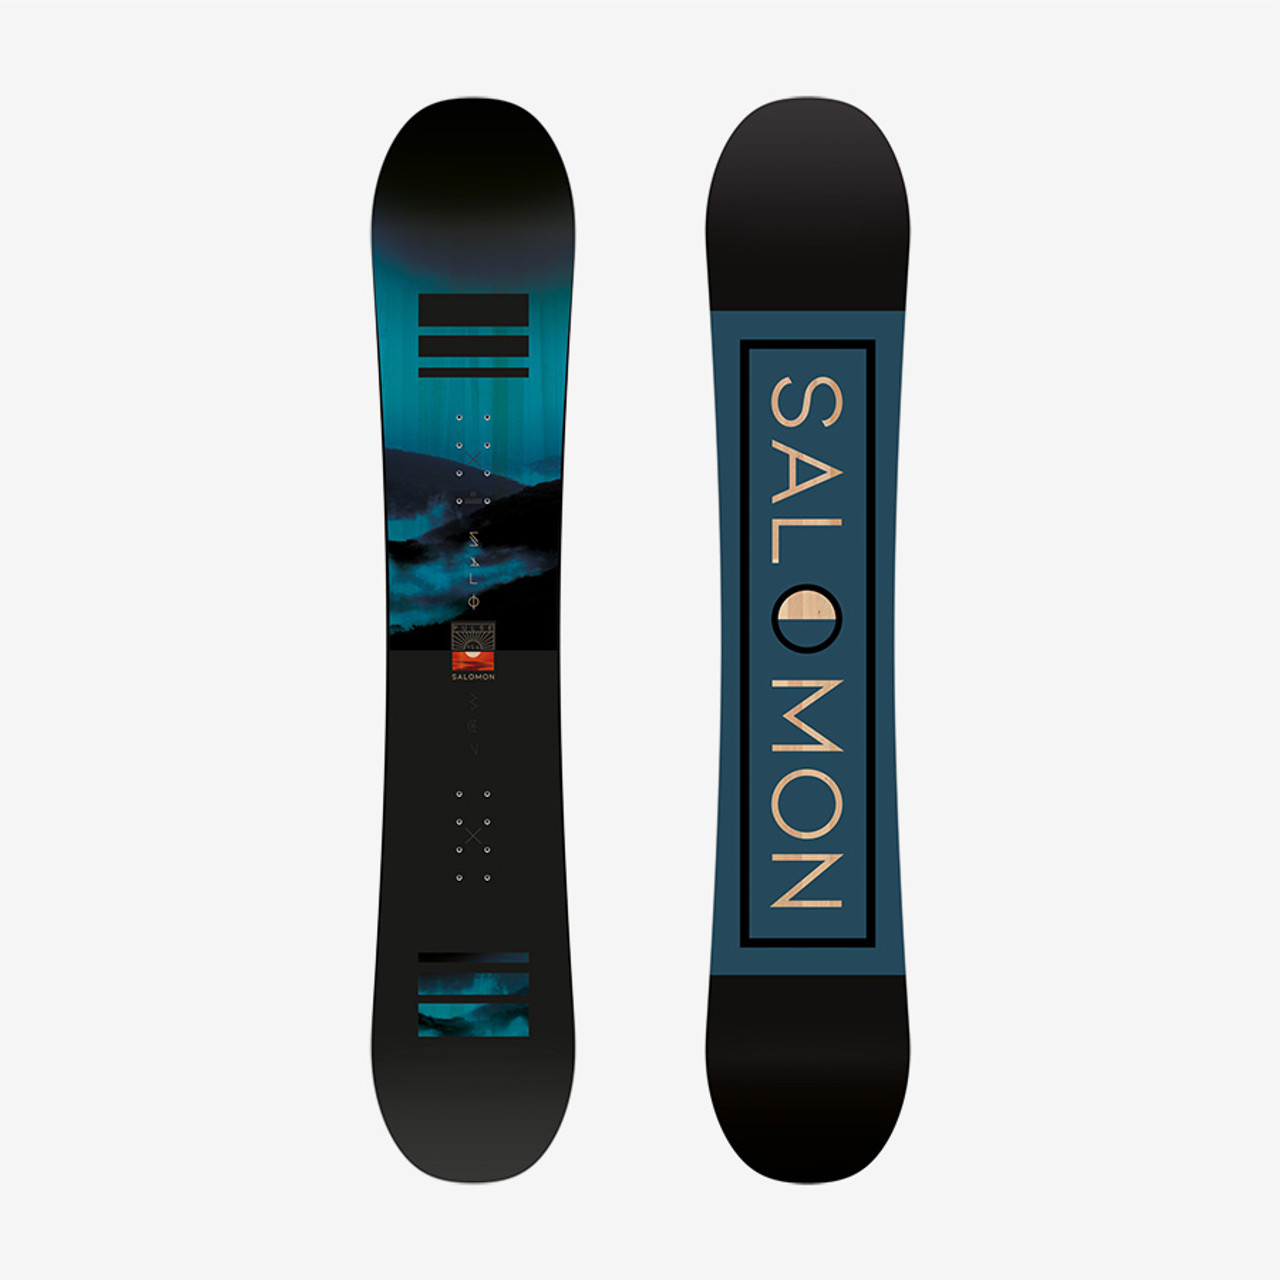 SALOMON PULSE 152cm 2020-2021 セット - スノーボード